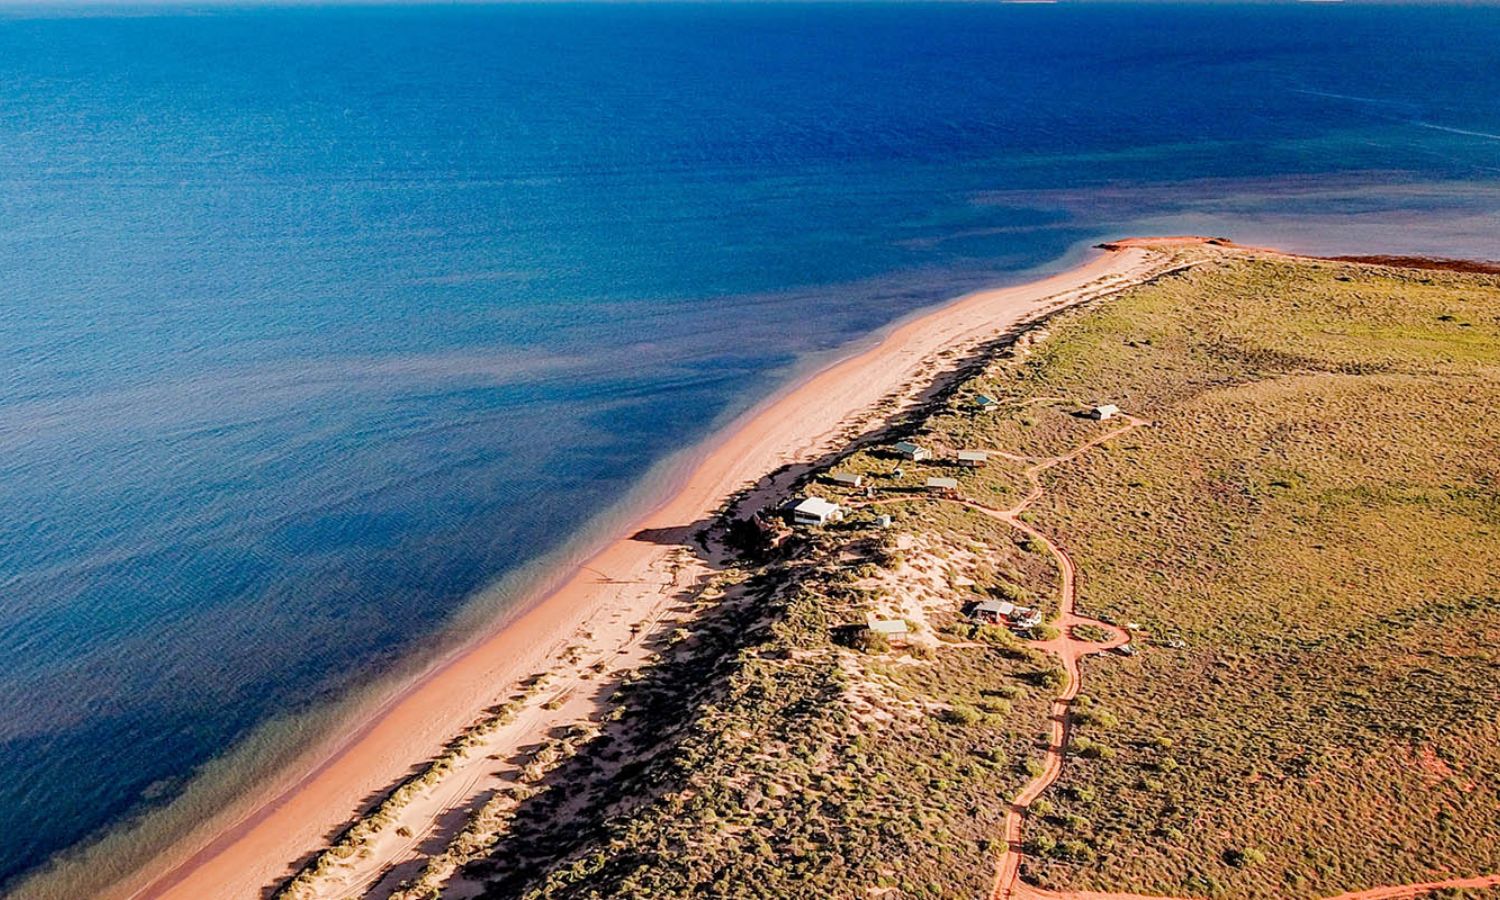 An image of an island resort in Australia